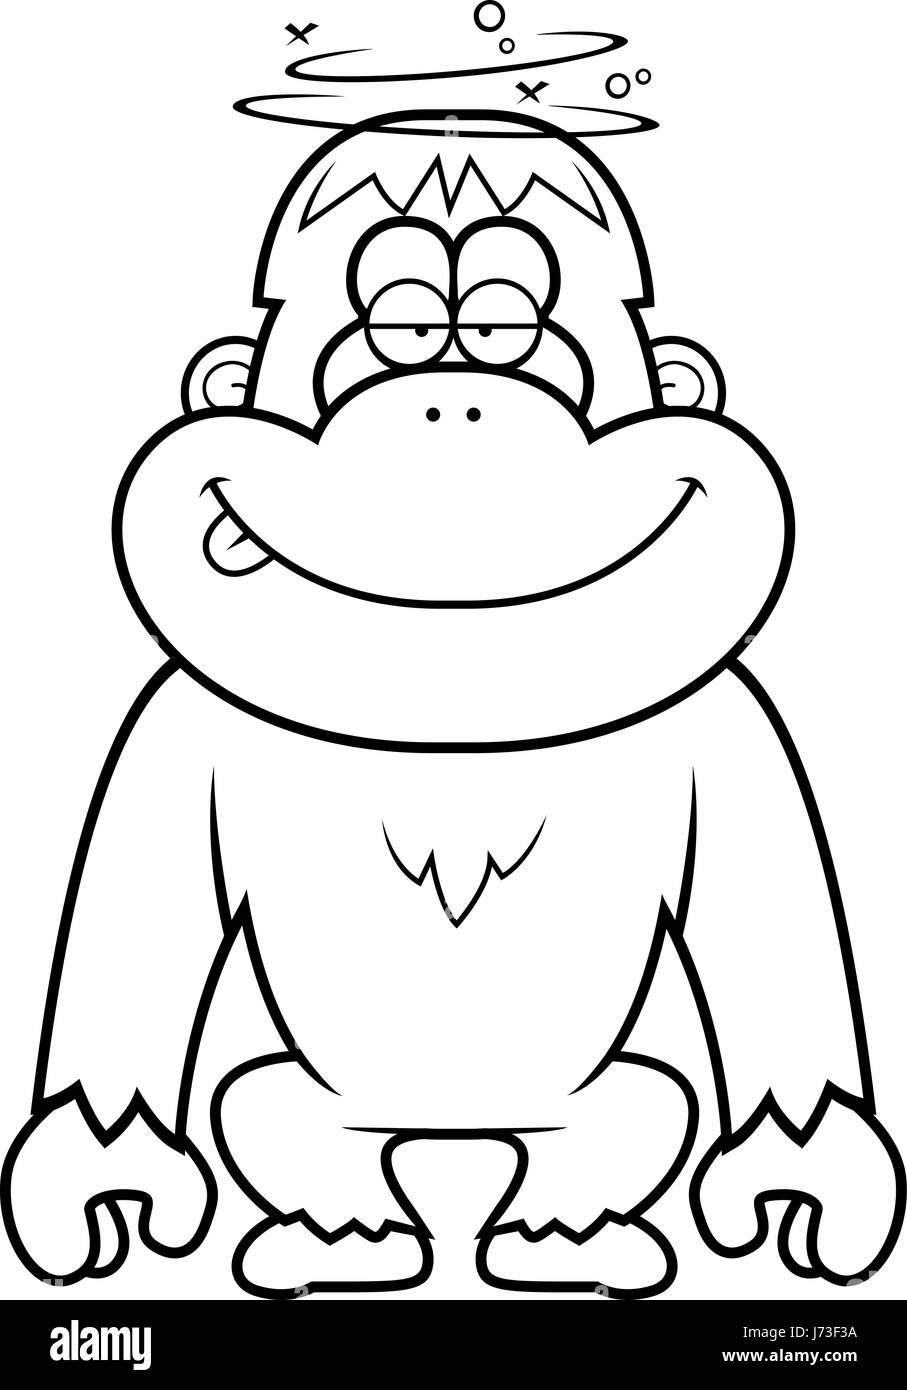 A cartoon illustration of a stupid orangutan. Stock Vector